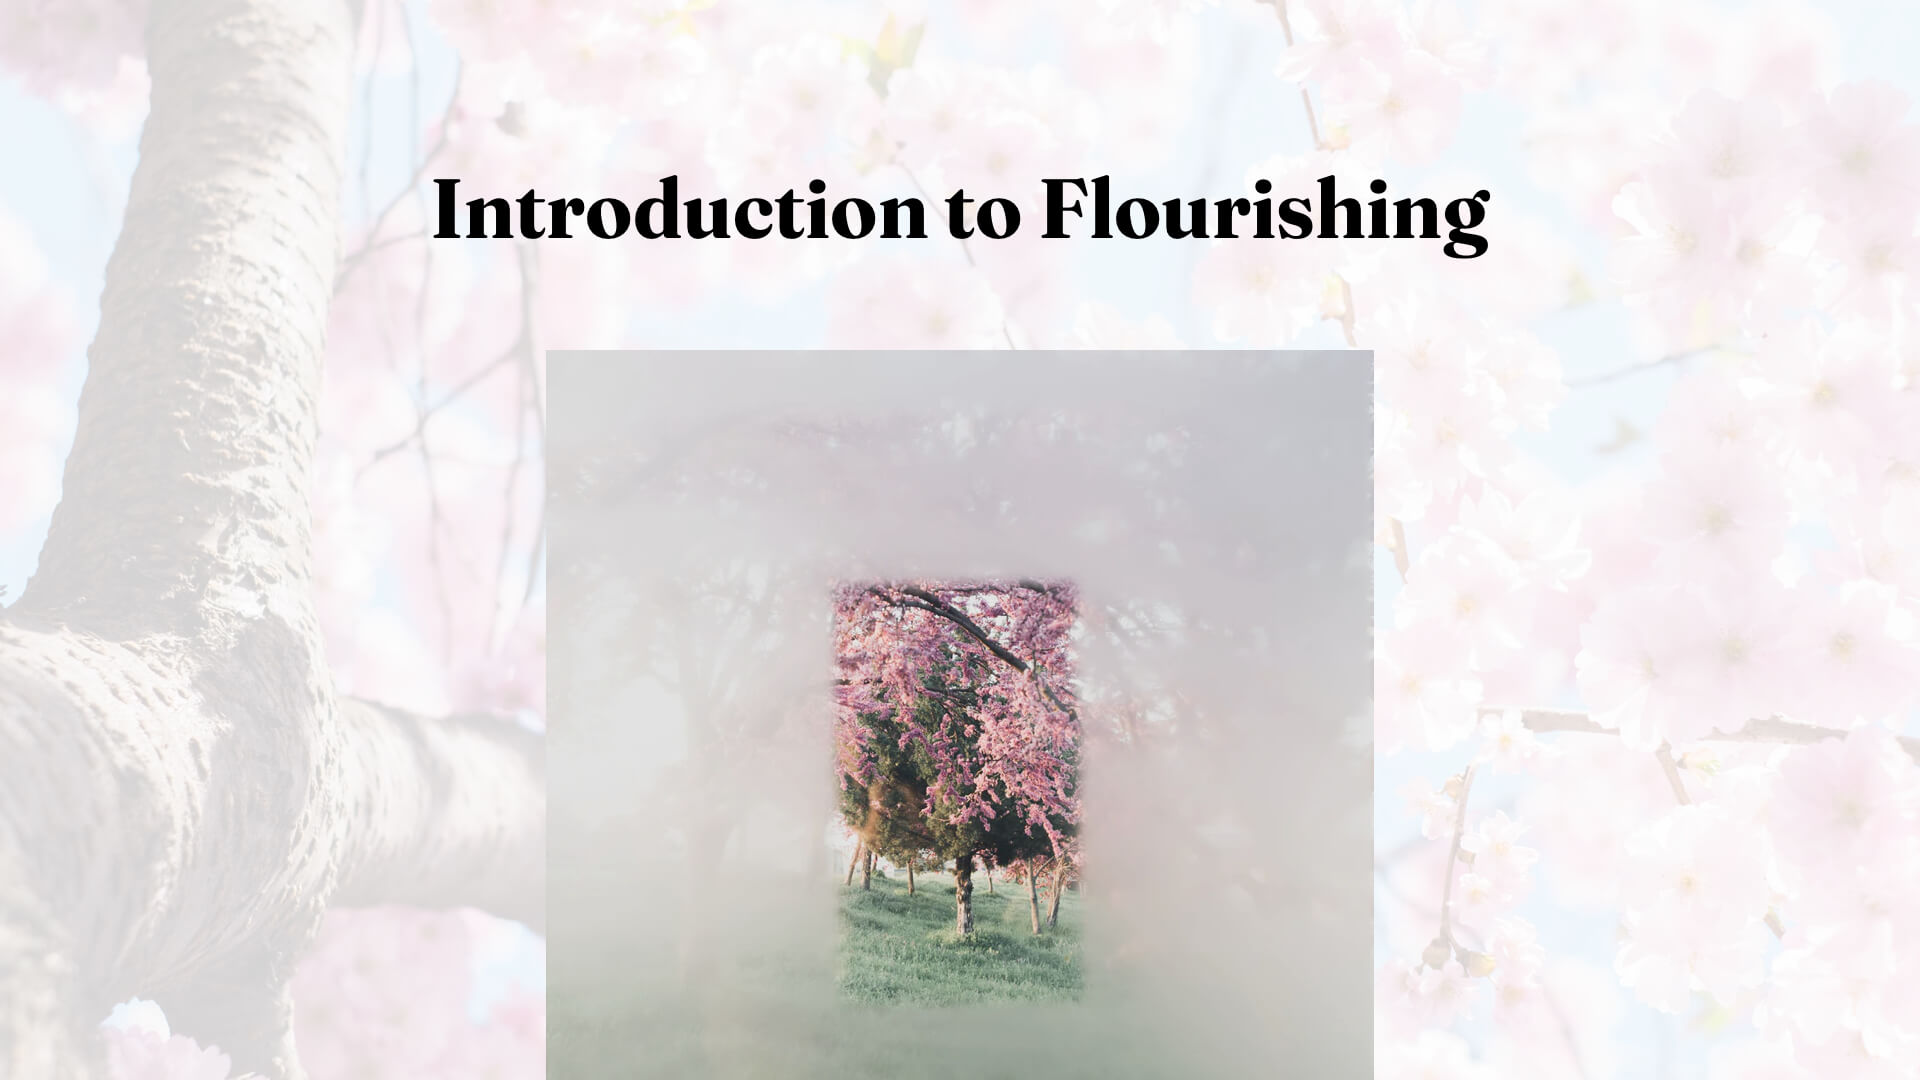 Introduction to Flourishing